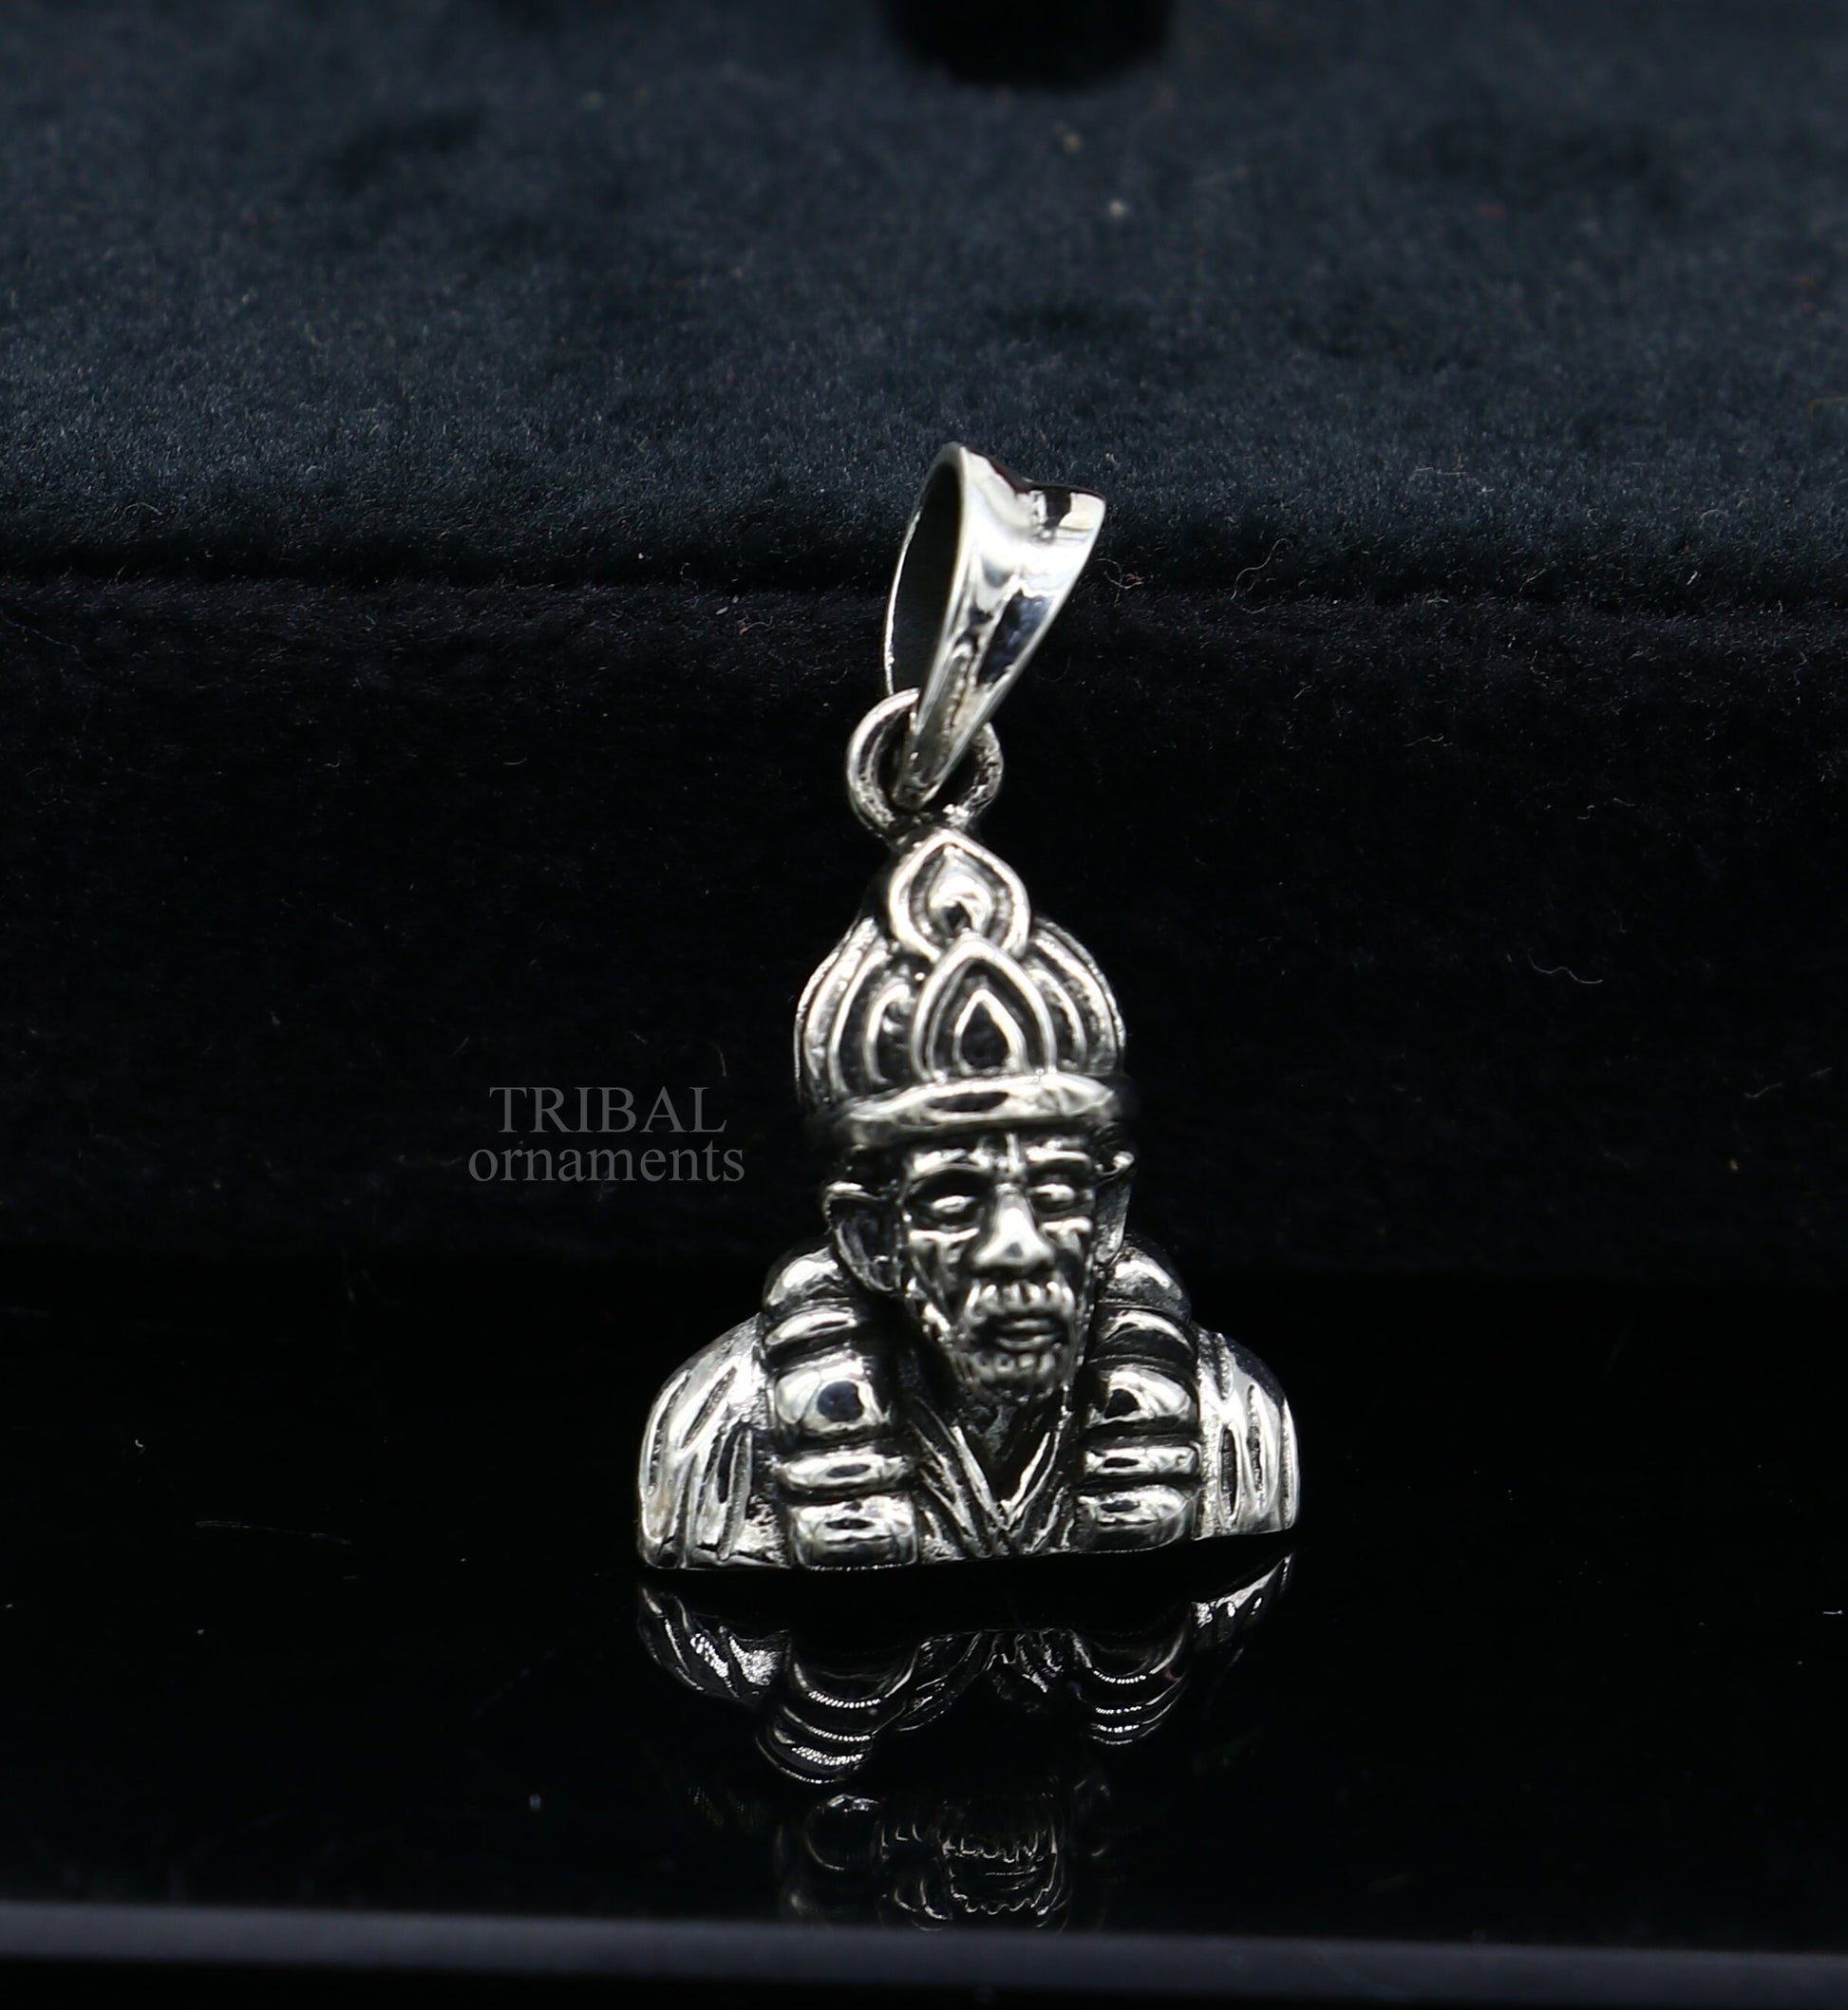 925 sterling silver handmade Indian idol Sai Baba pendant, amazing stylish unisex pendant locket personalized jewelry tribal jewelry ssp1703 - TRIBAL ORNAMENTS